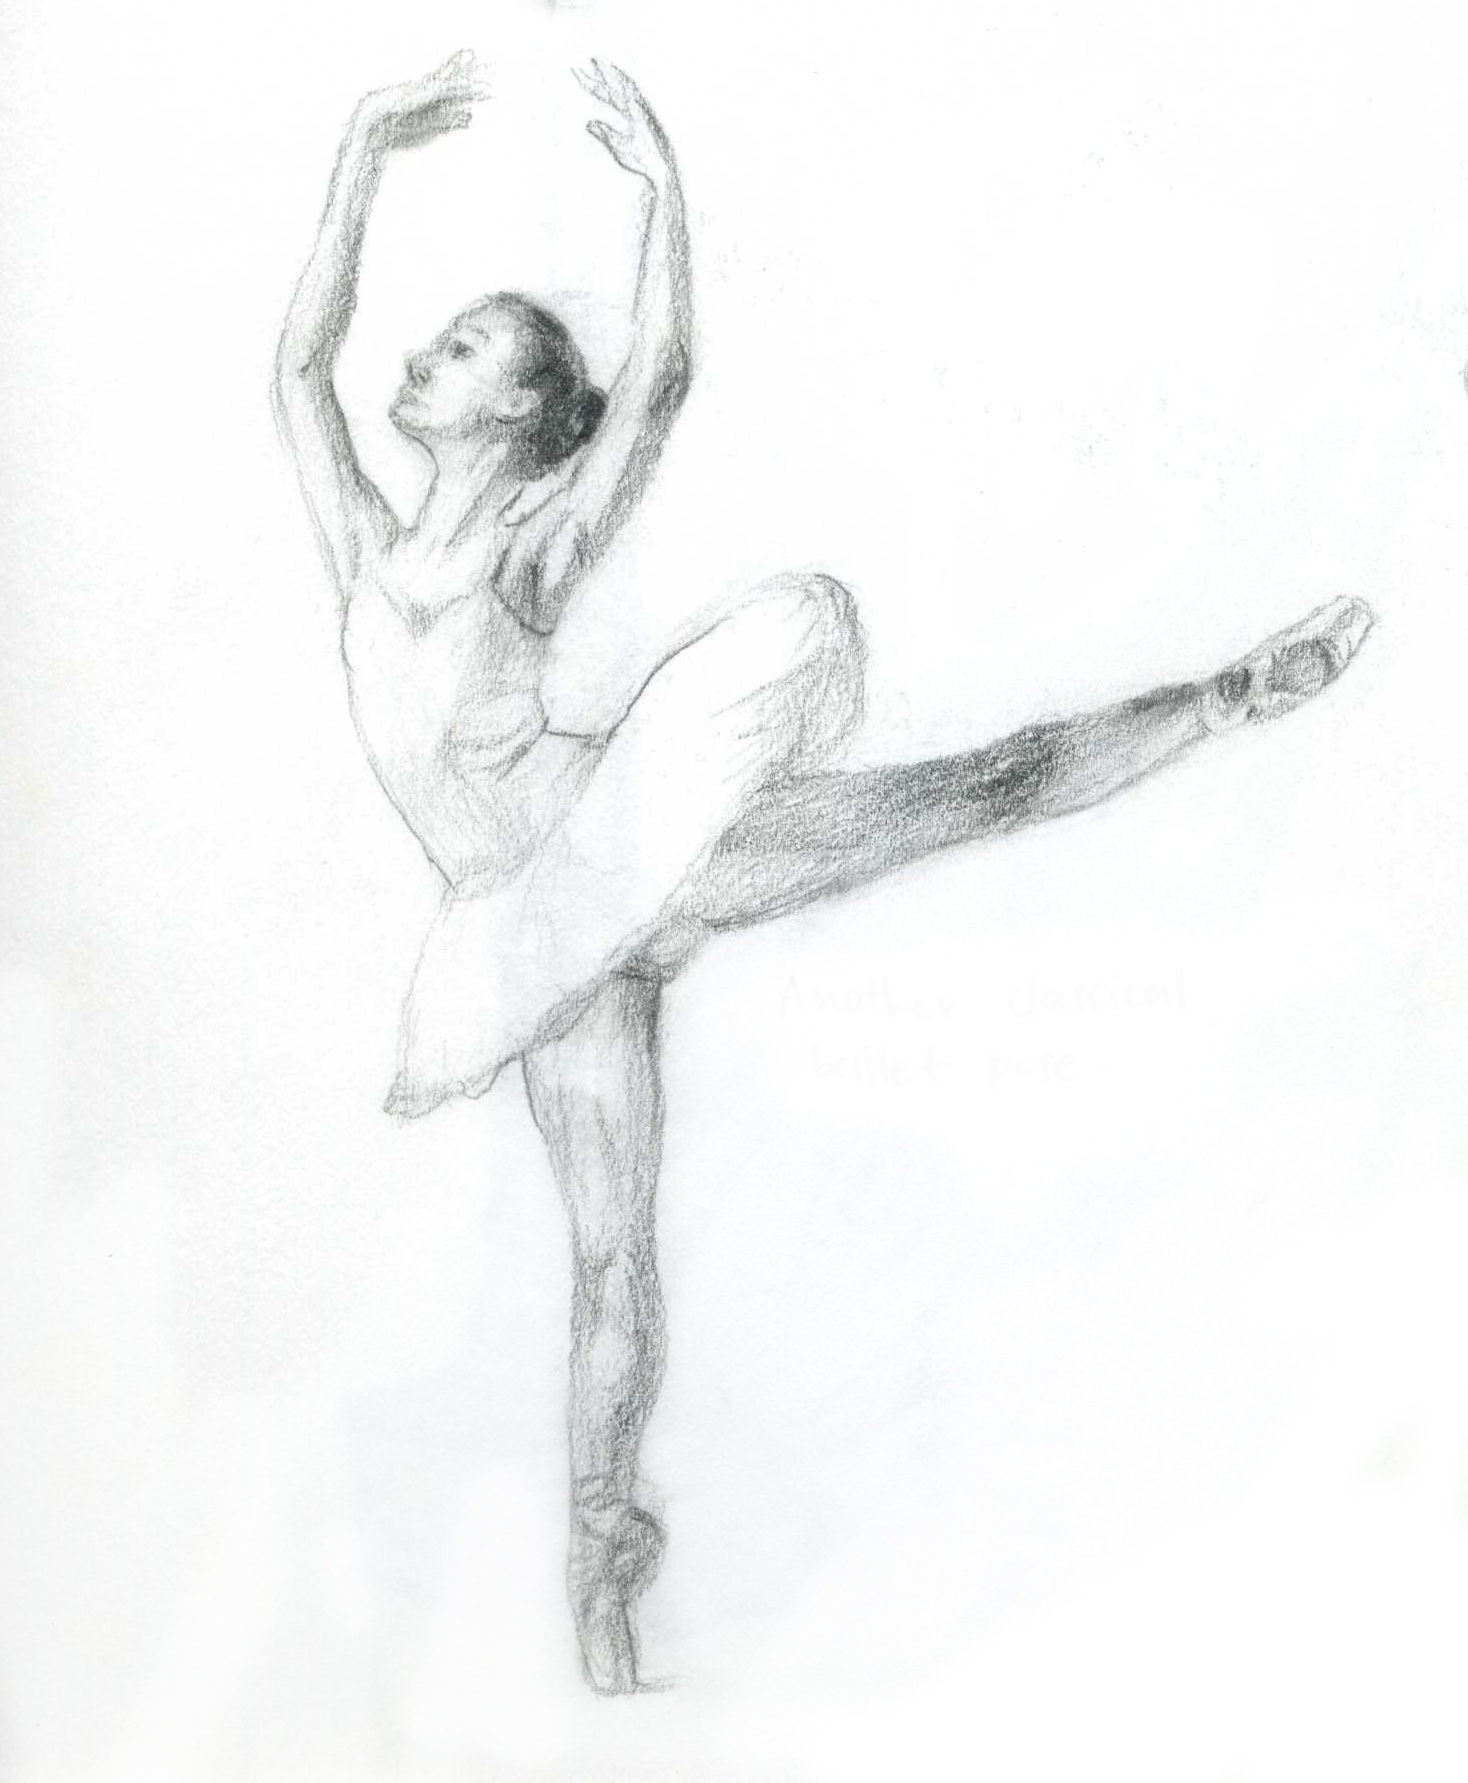 Ballerina Pencil Sketch at Explore collection of